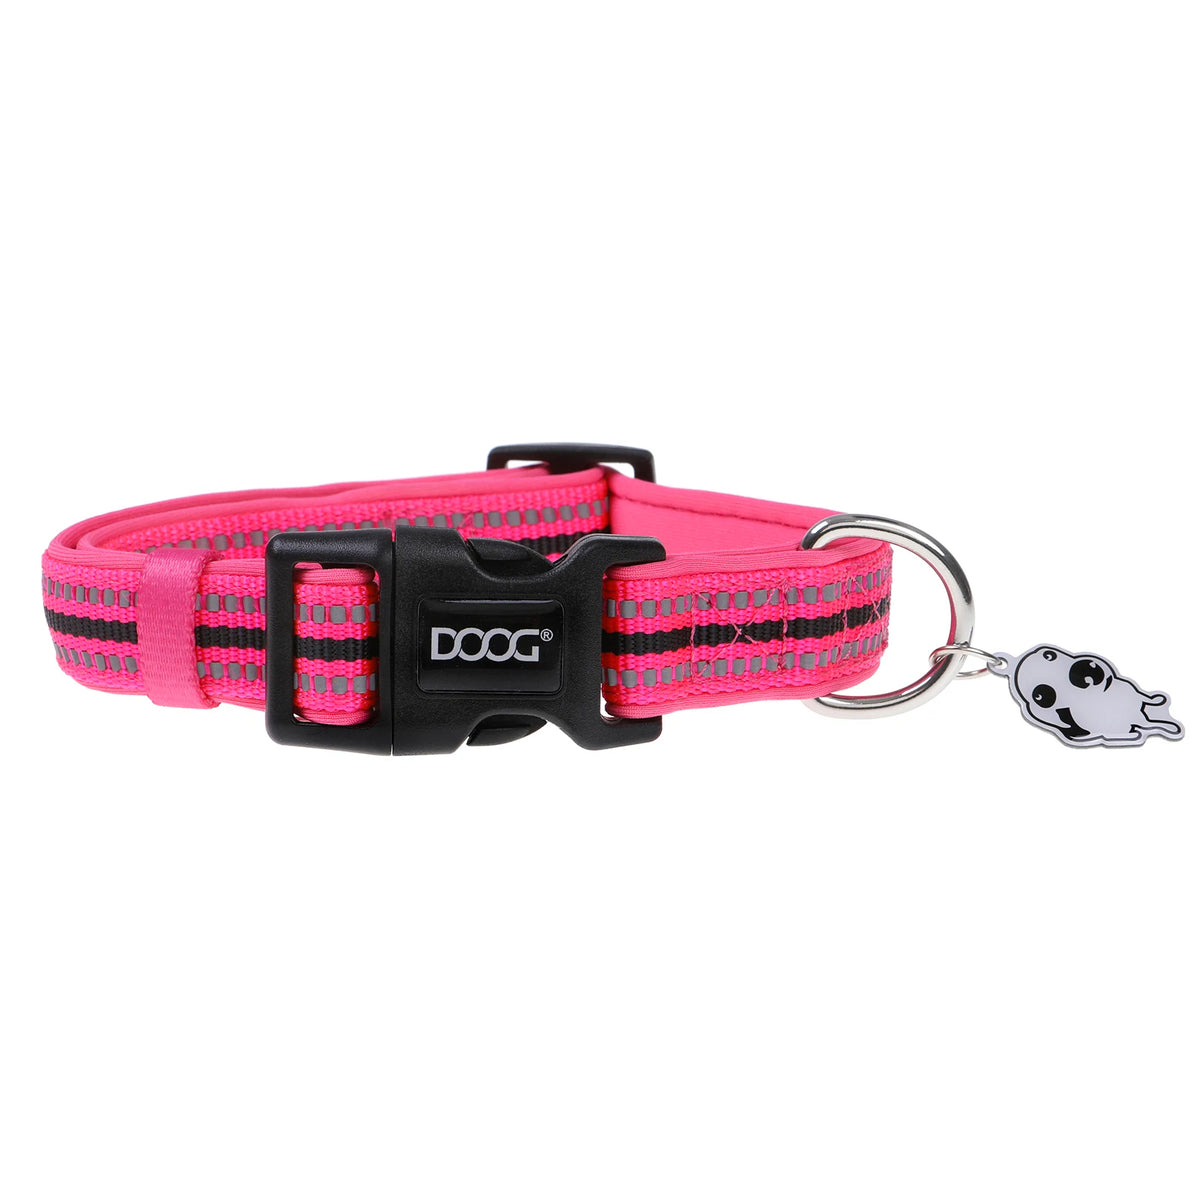 DOOG Neon High Vis Neoprene Dog Collar